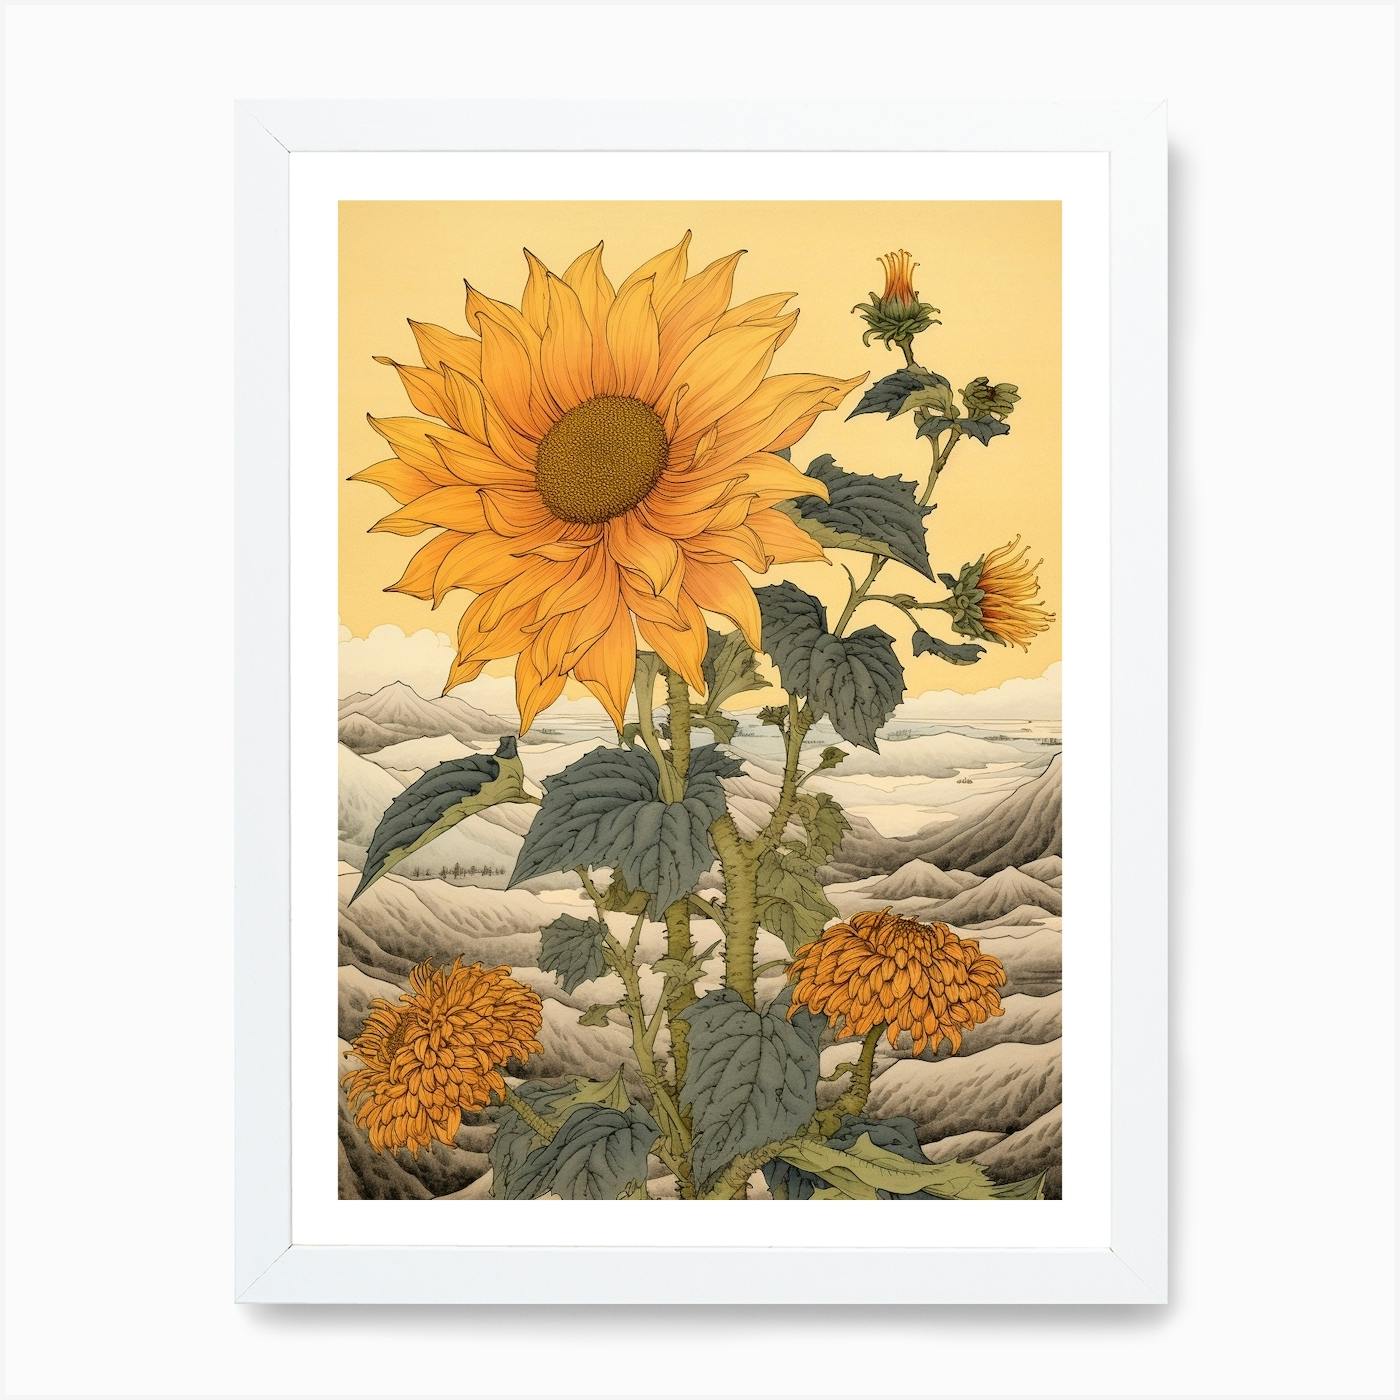 Himawari Sunflower 2 Japanese Botanical Illustration Art Print by